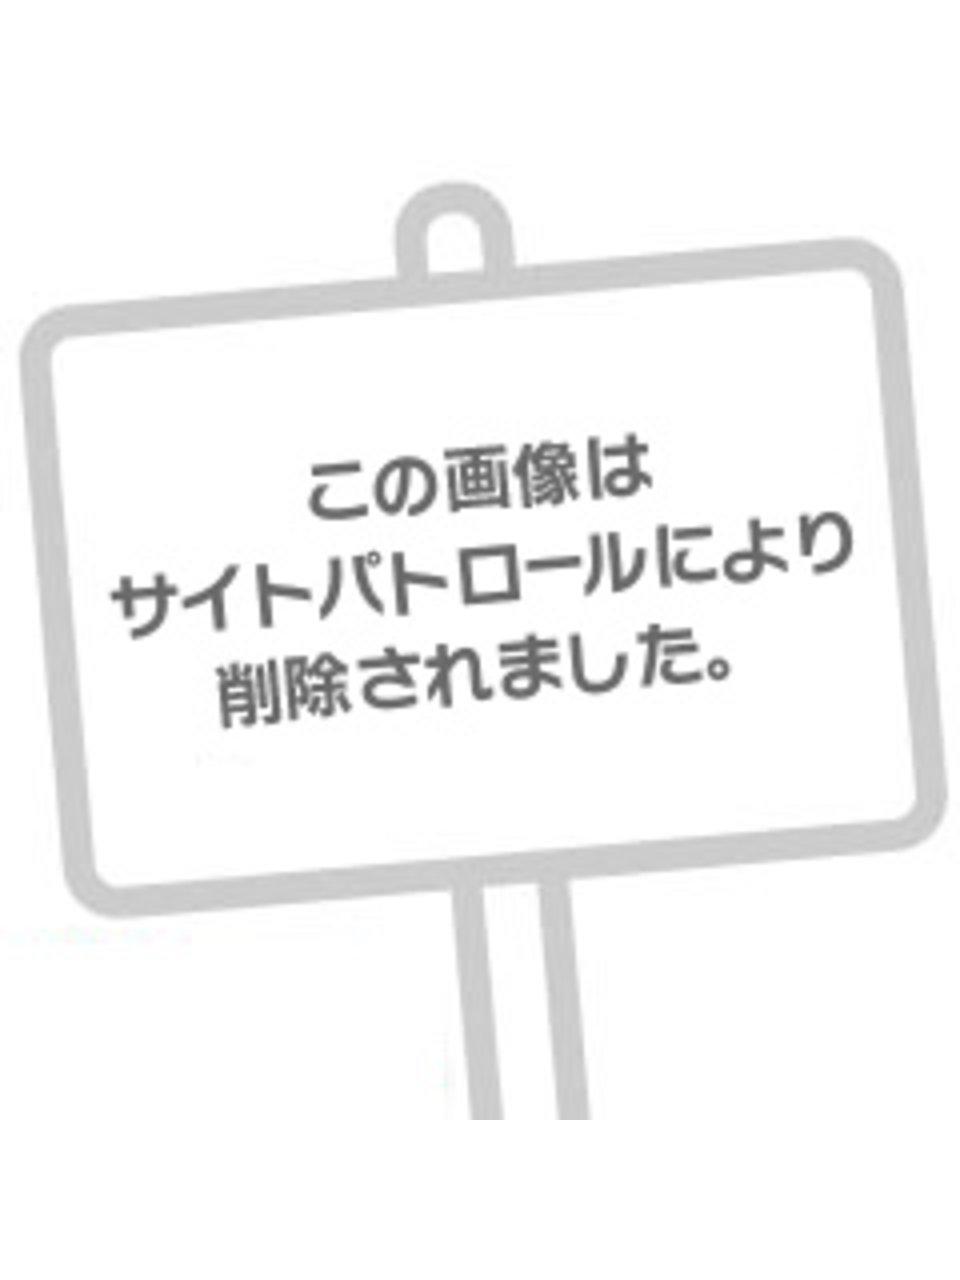 <img class="emojione" alt="🐇" title=":rabbit2:" src="https://fuzoku.jp/assets/img/emojione/1f407.png"/>ふりふりෆ